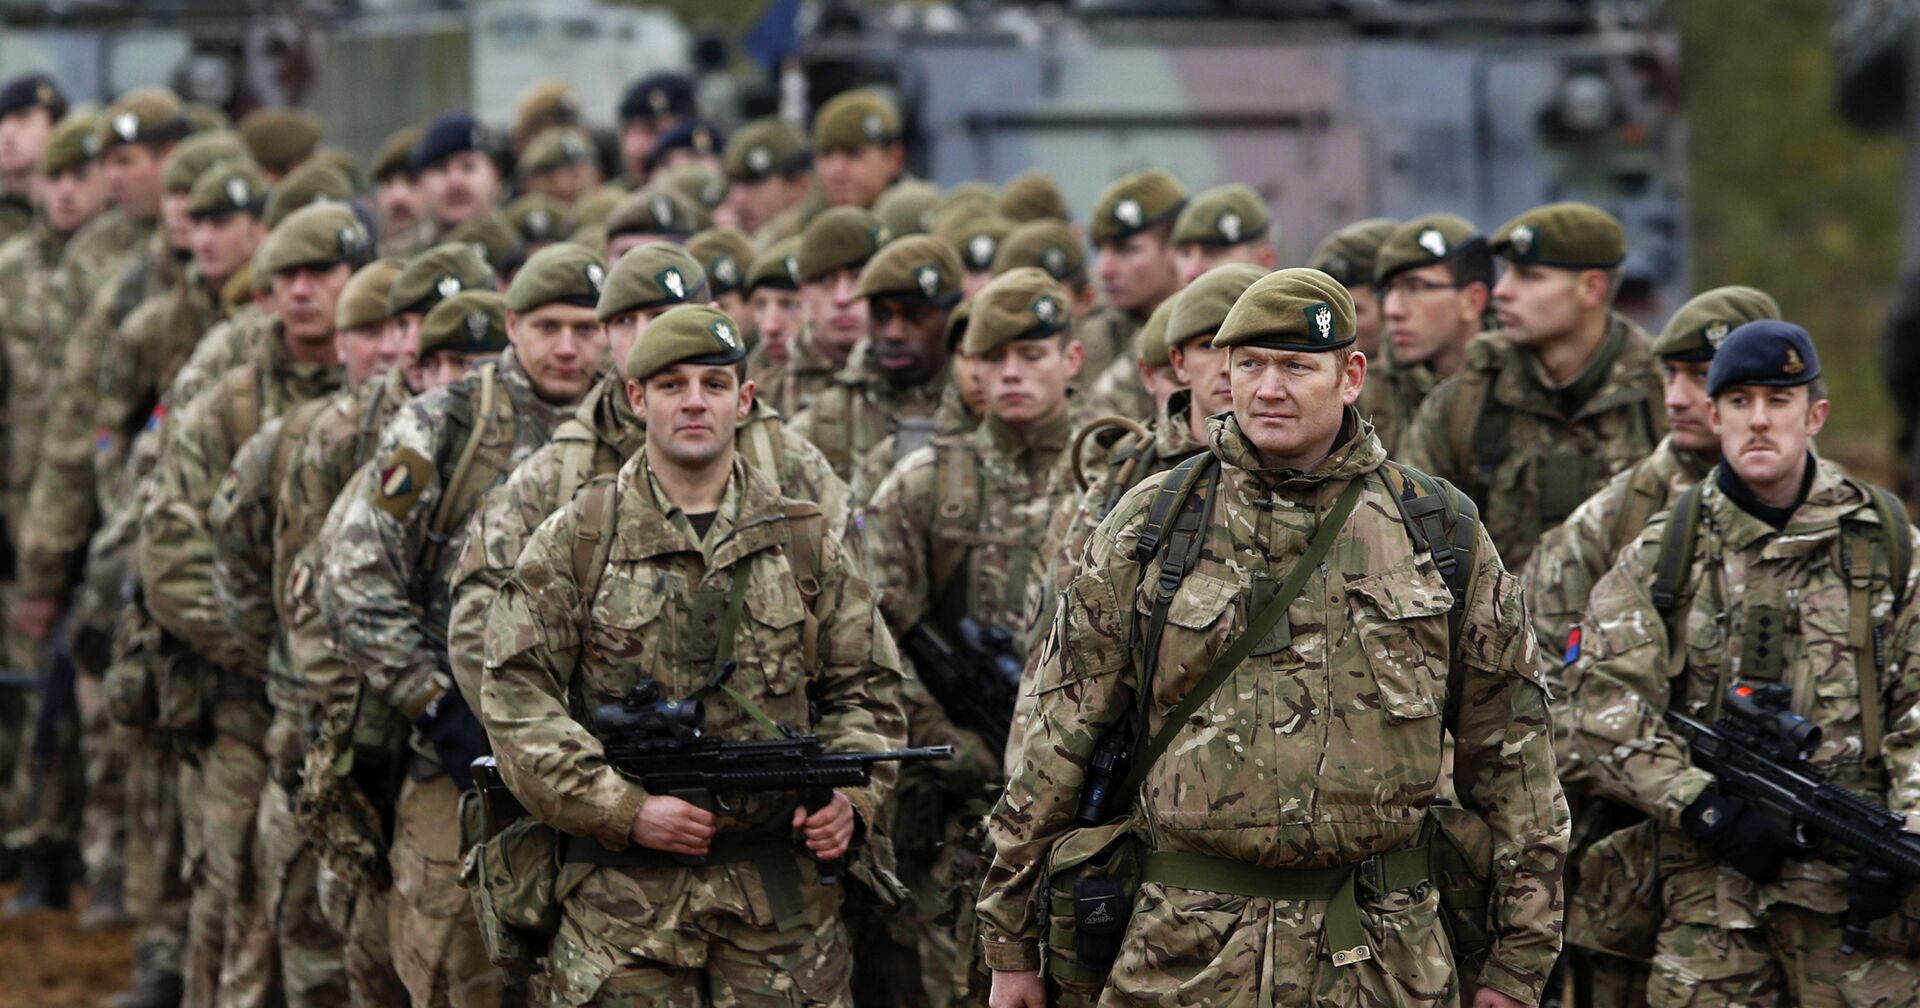 Британские солдаты на учениях НАТО Iron Sword 2014 в Литве - ИноСМИ, 1920, 29.09.2020